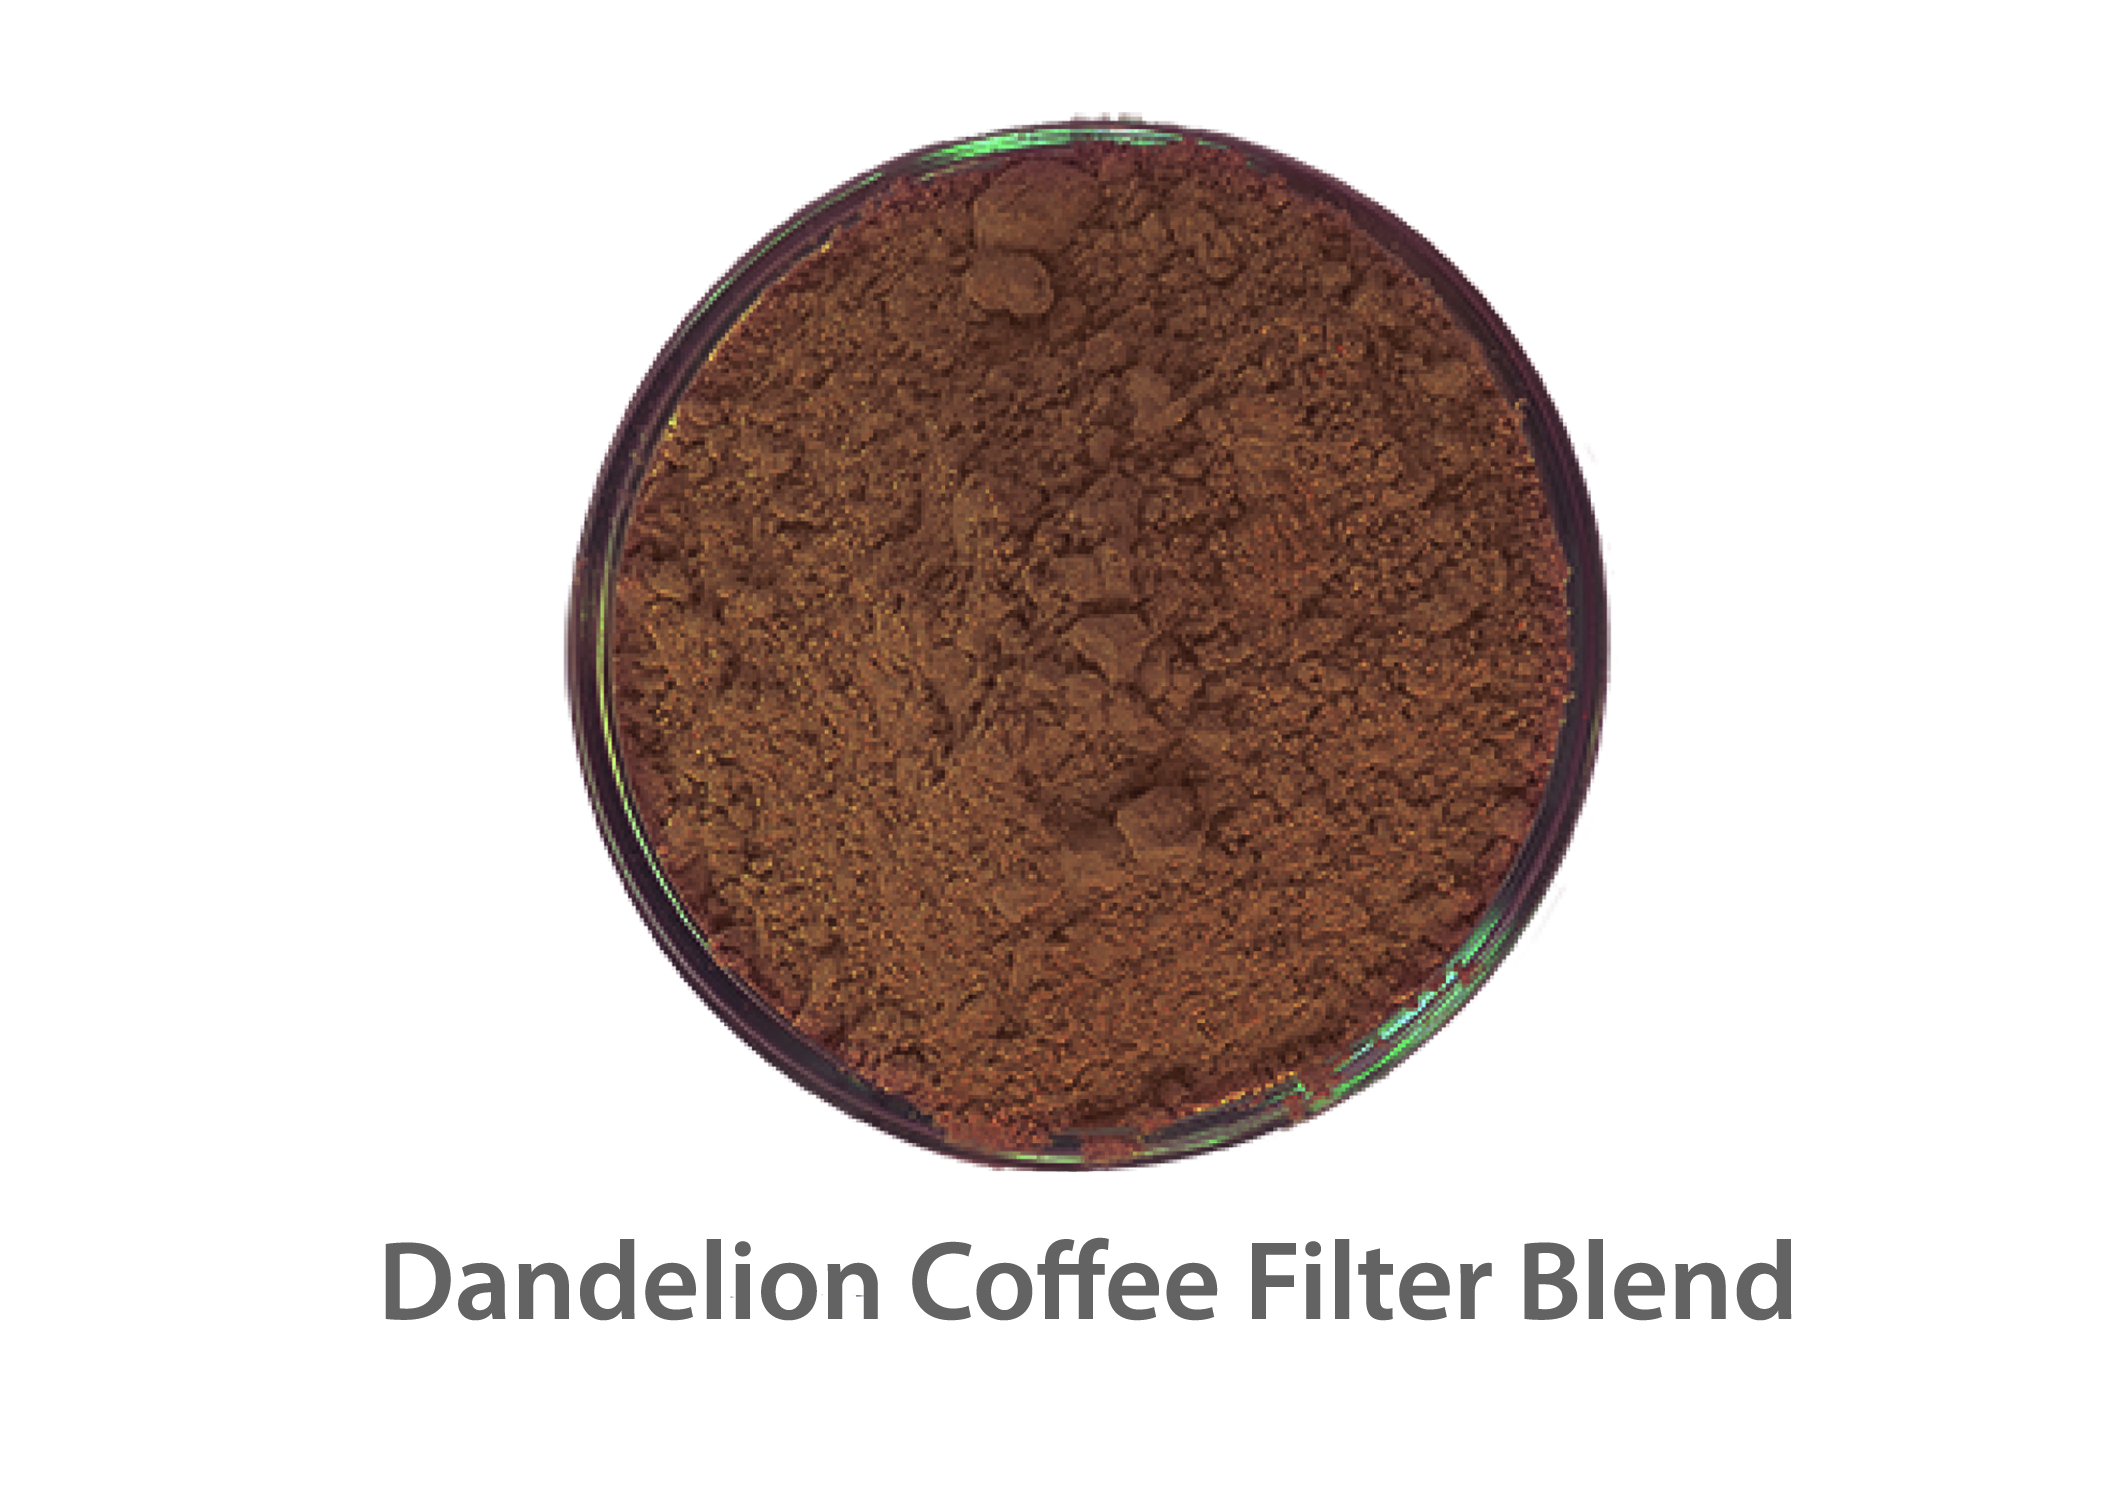 dandelion coffee powder filter blend.png